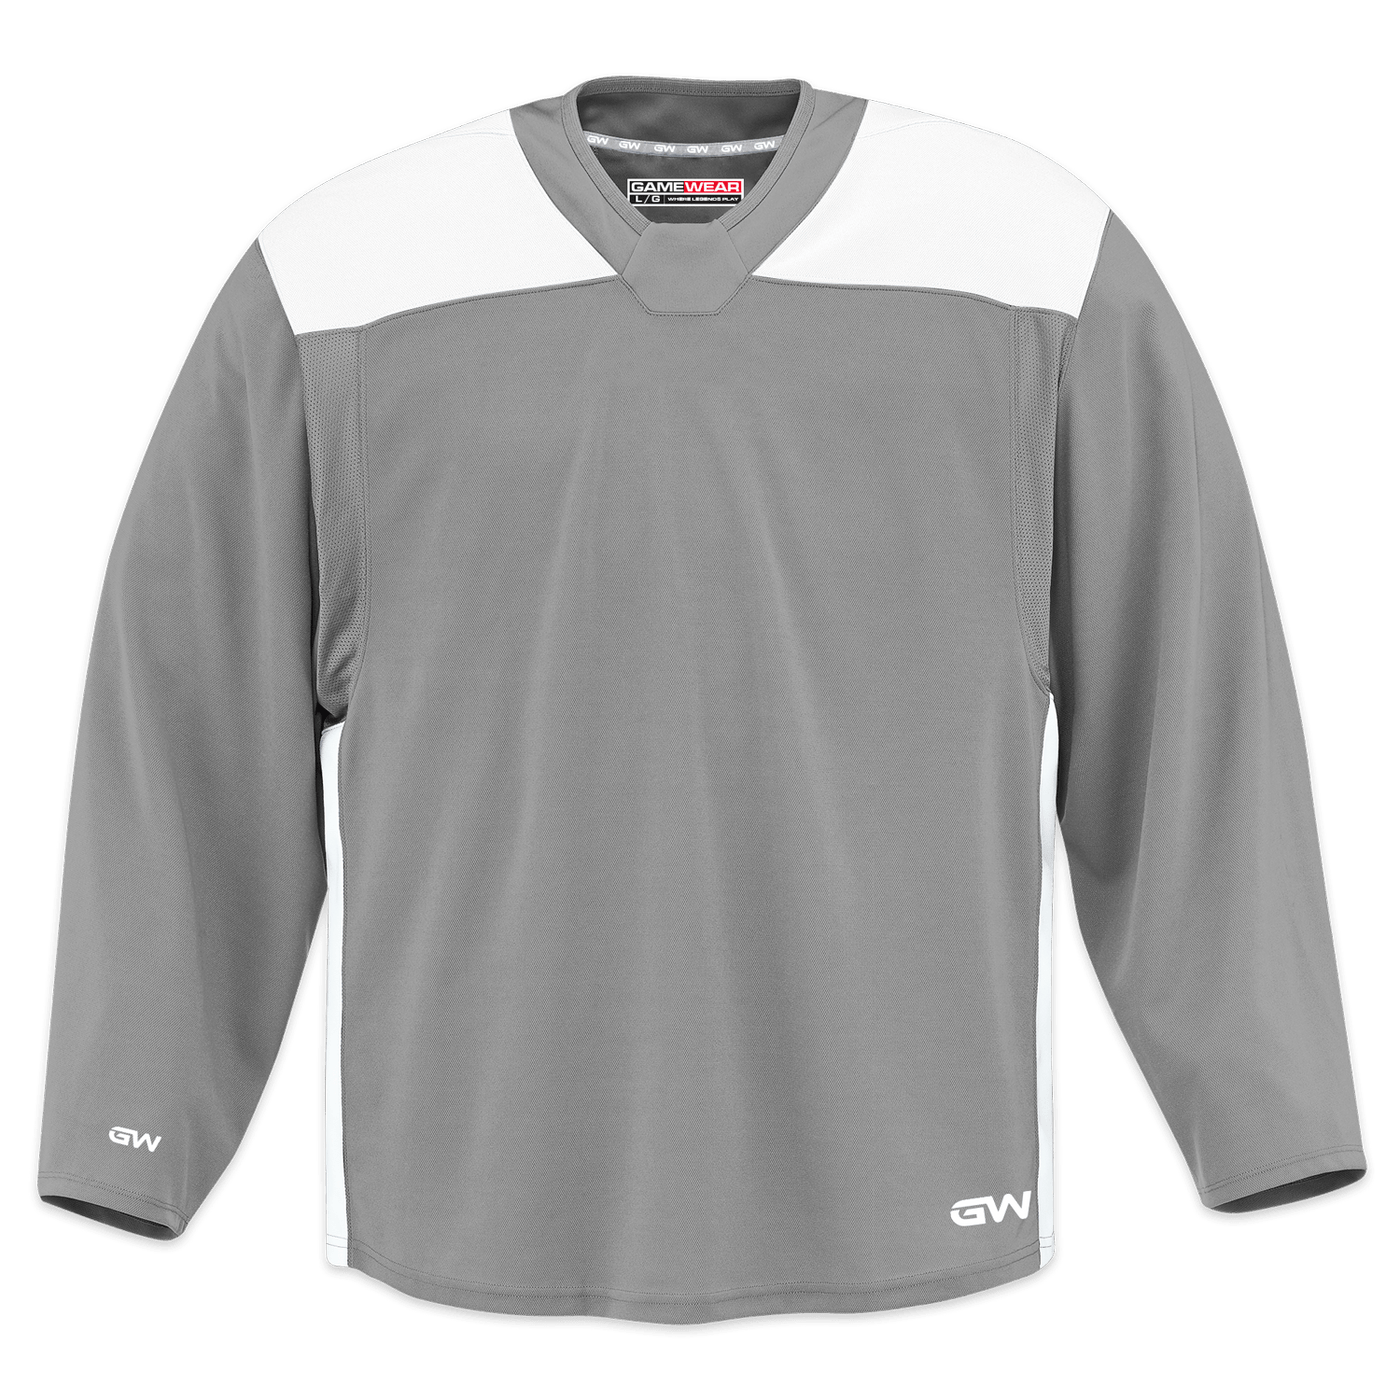 GameWear GW6500 ProLite Series Junior Hockey Practice Jersey - Grey / White - The Hockey Shop Source For Sports